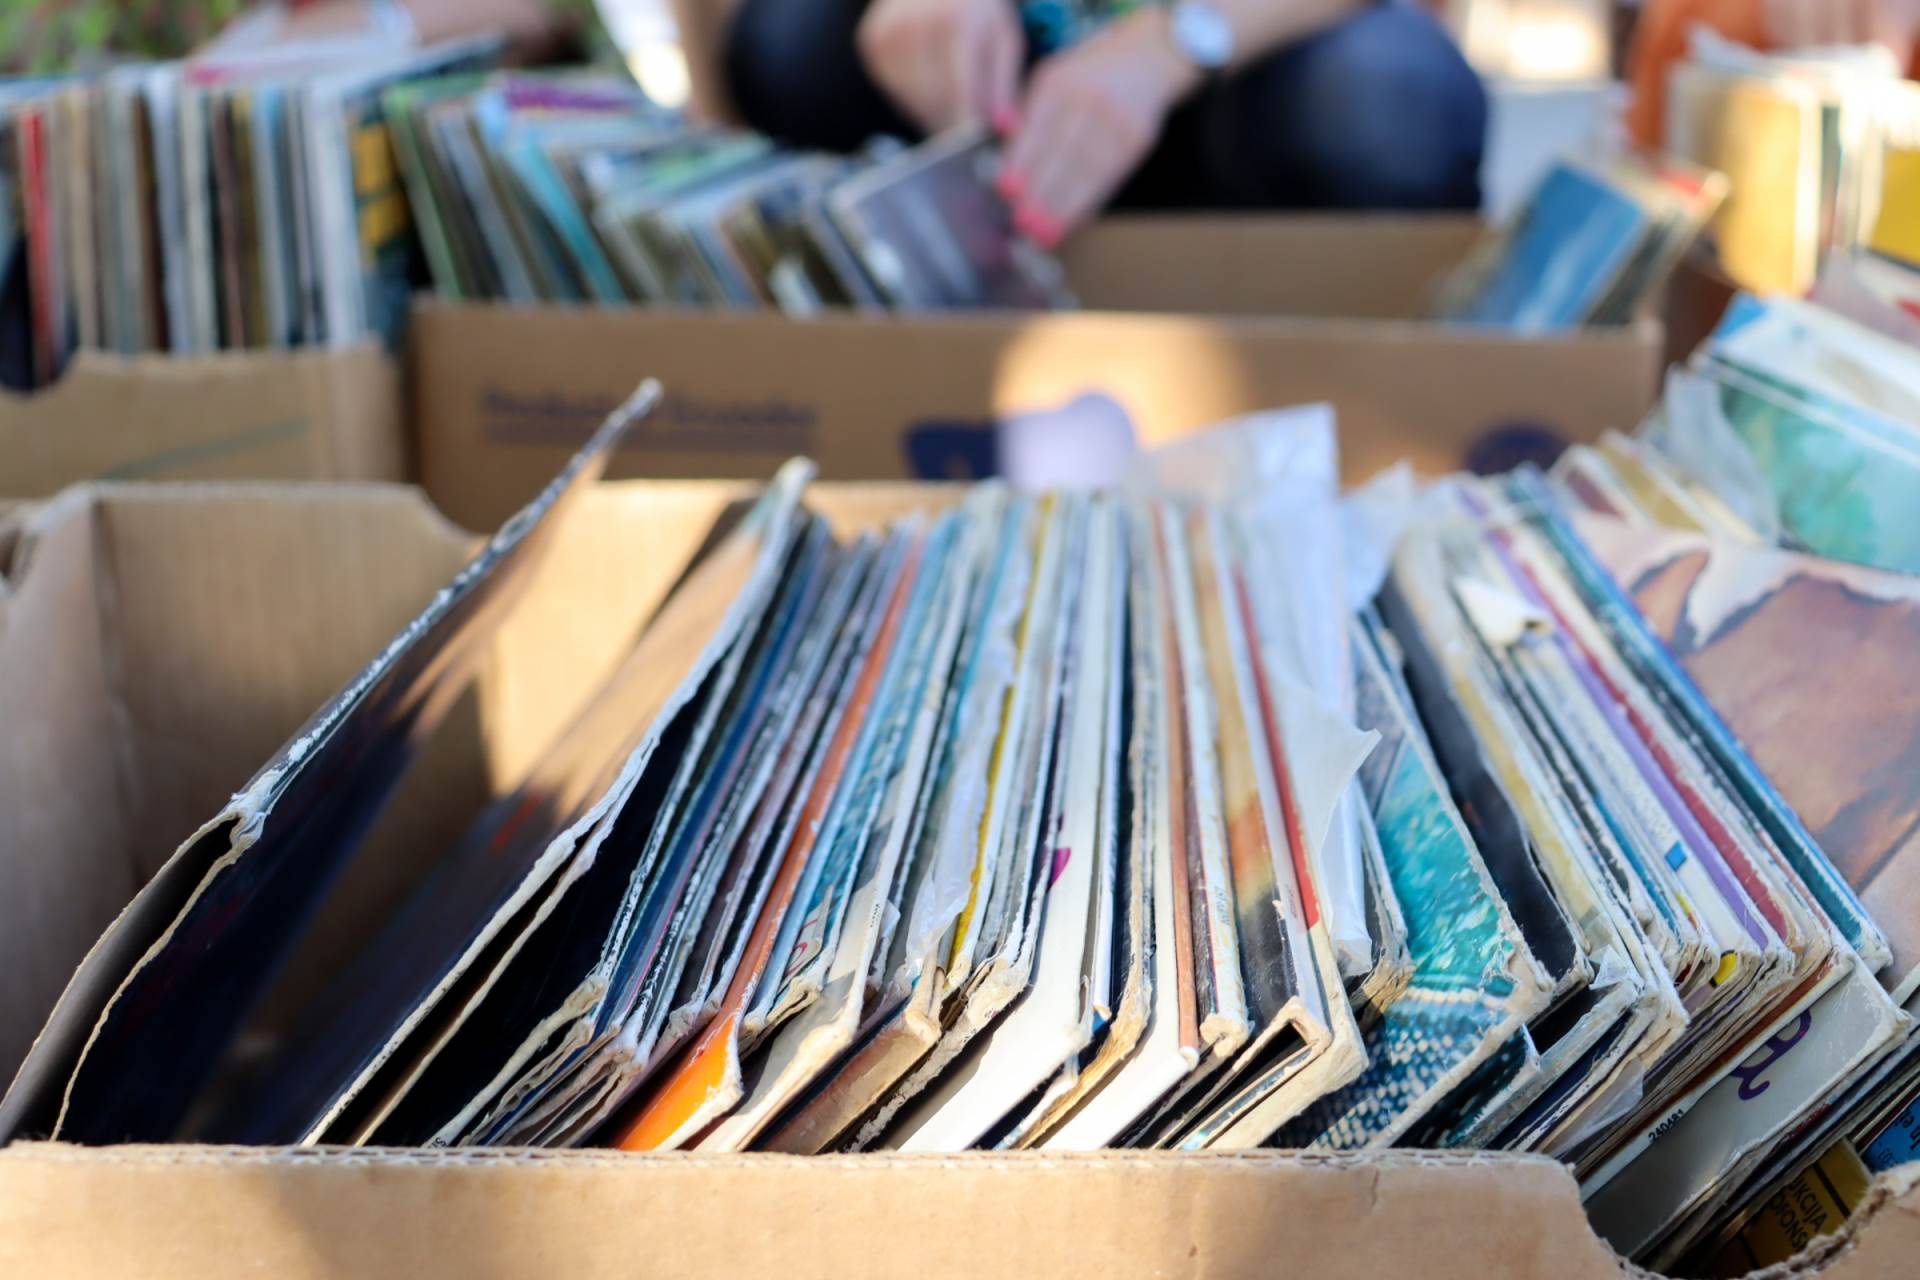  Rasprodaja gramofonskih ploča u Banjaluci 